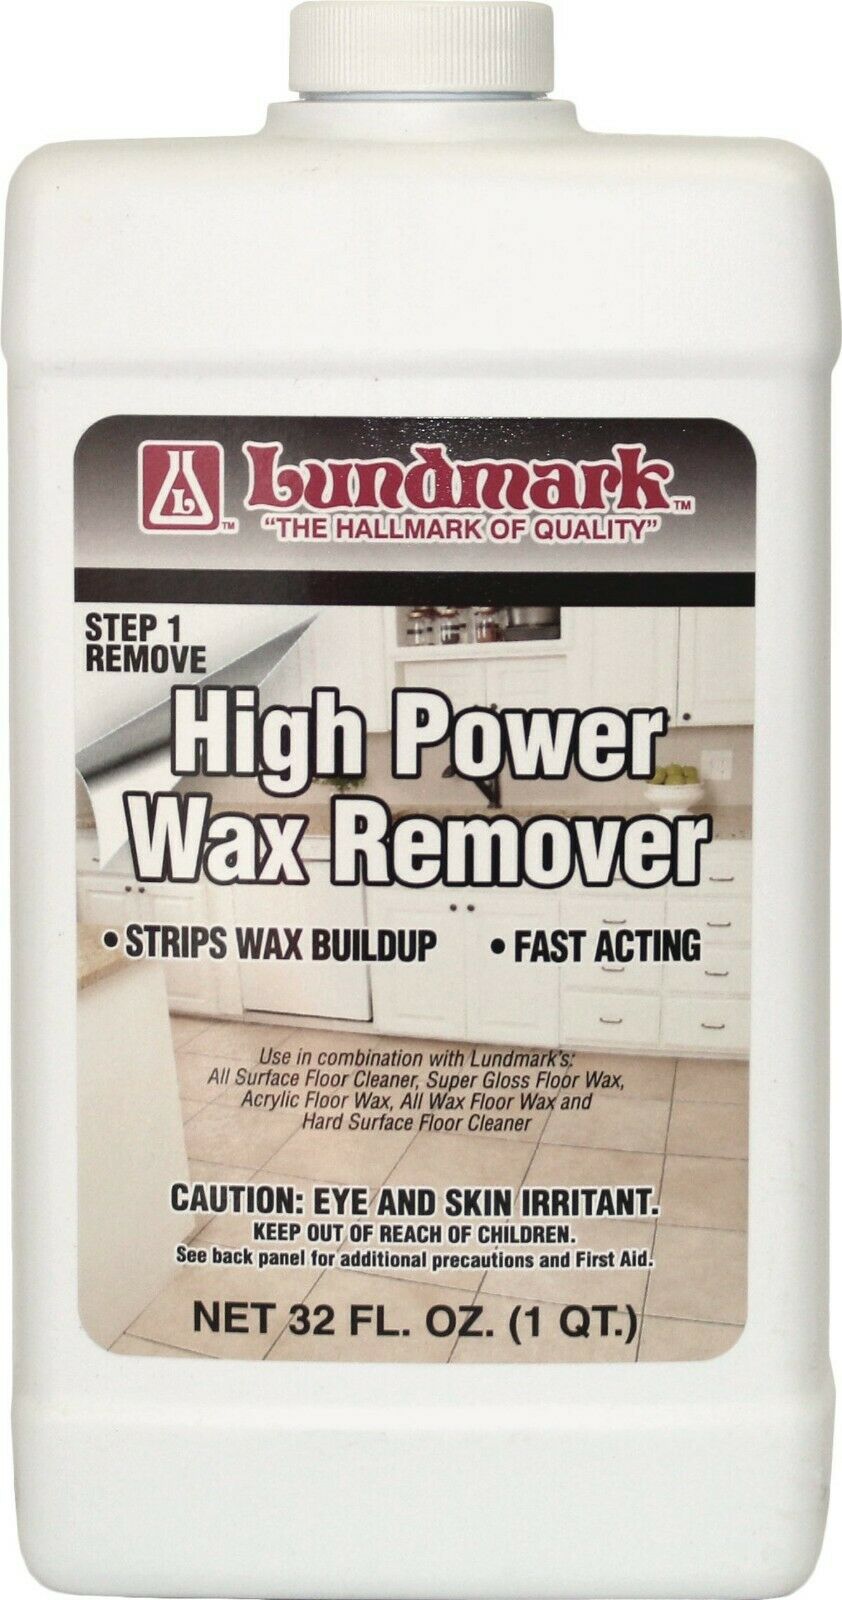 Lundmark High Power Wax Remover, Commercial Strength Floor Wax Stripper 32oz